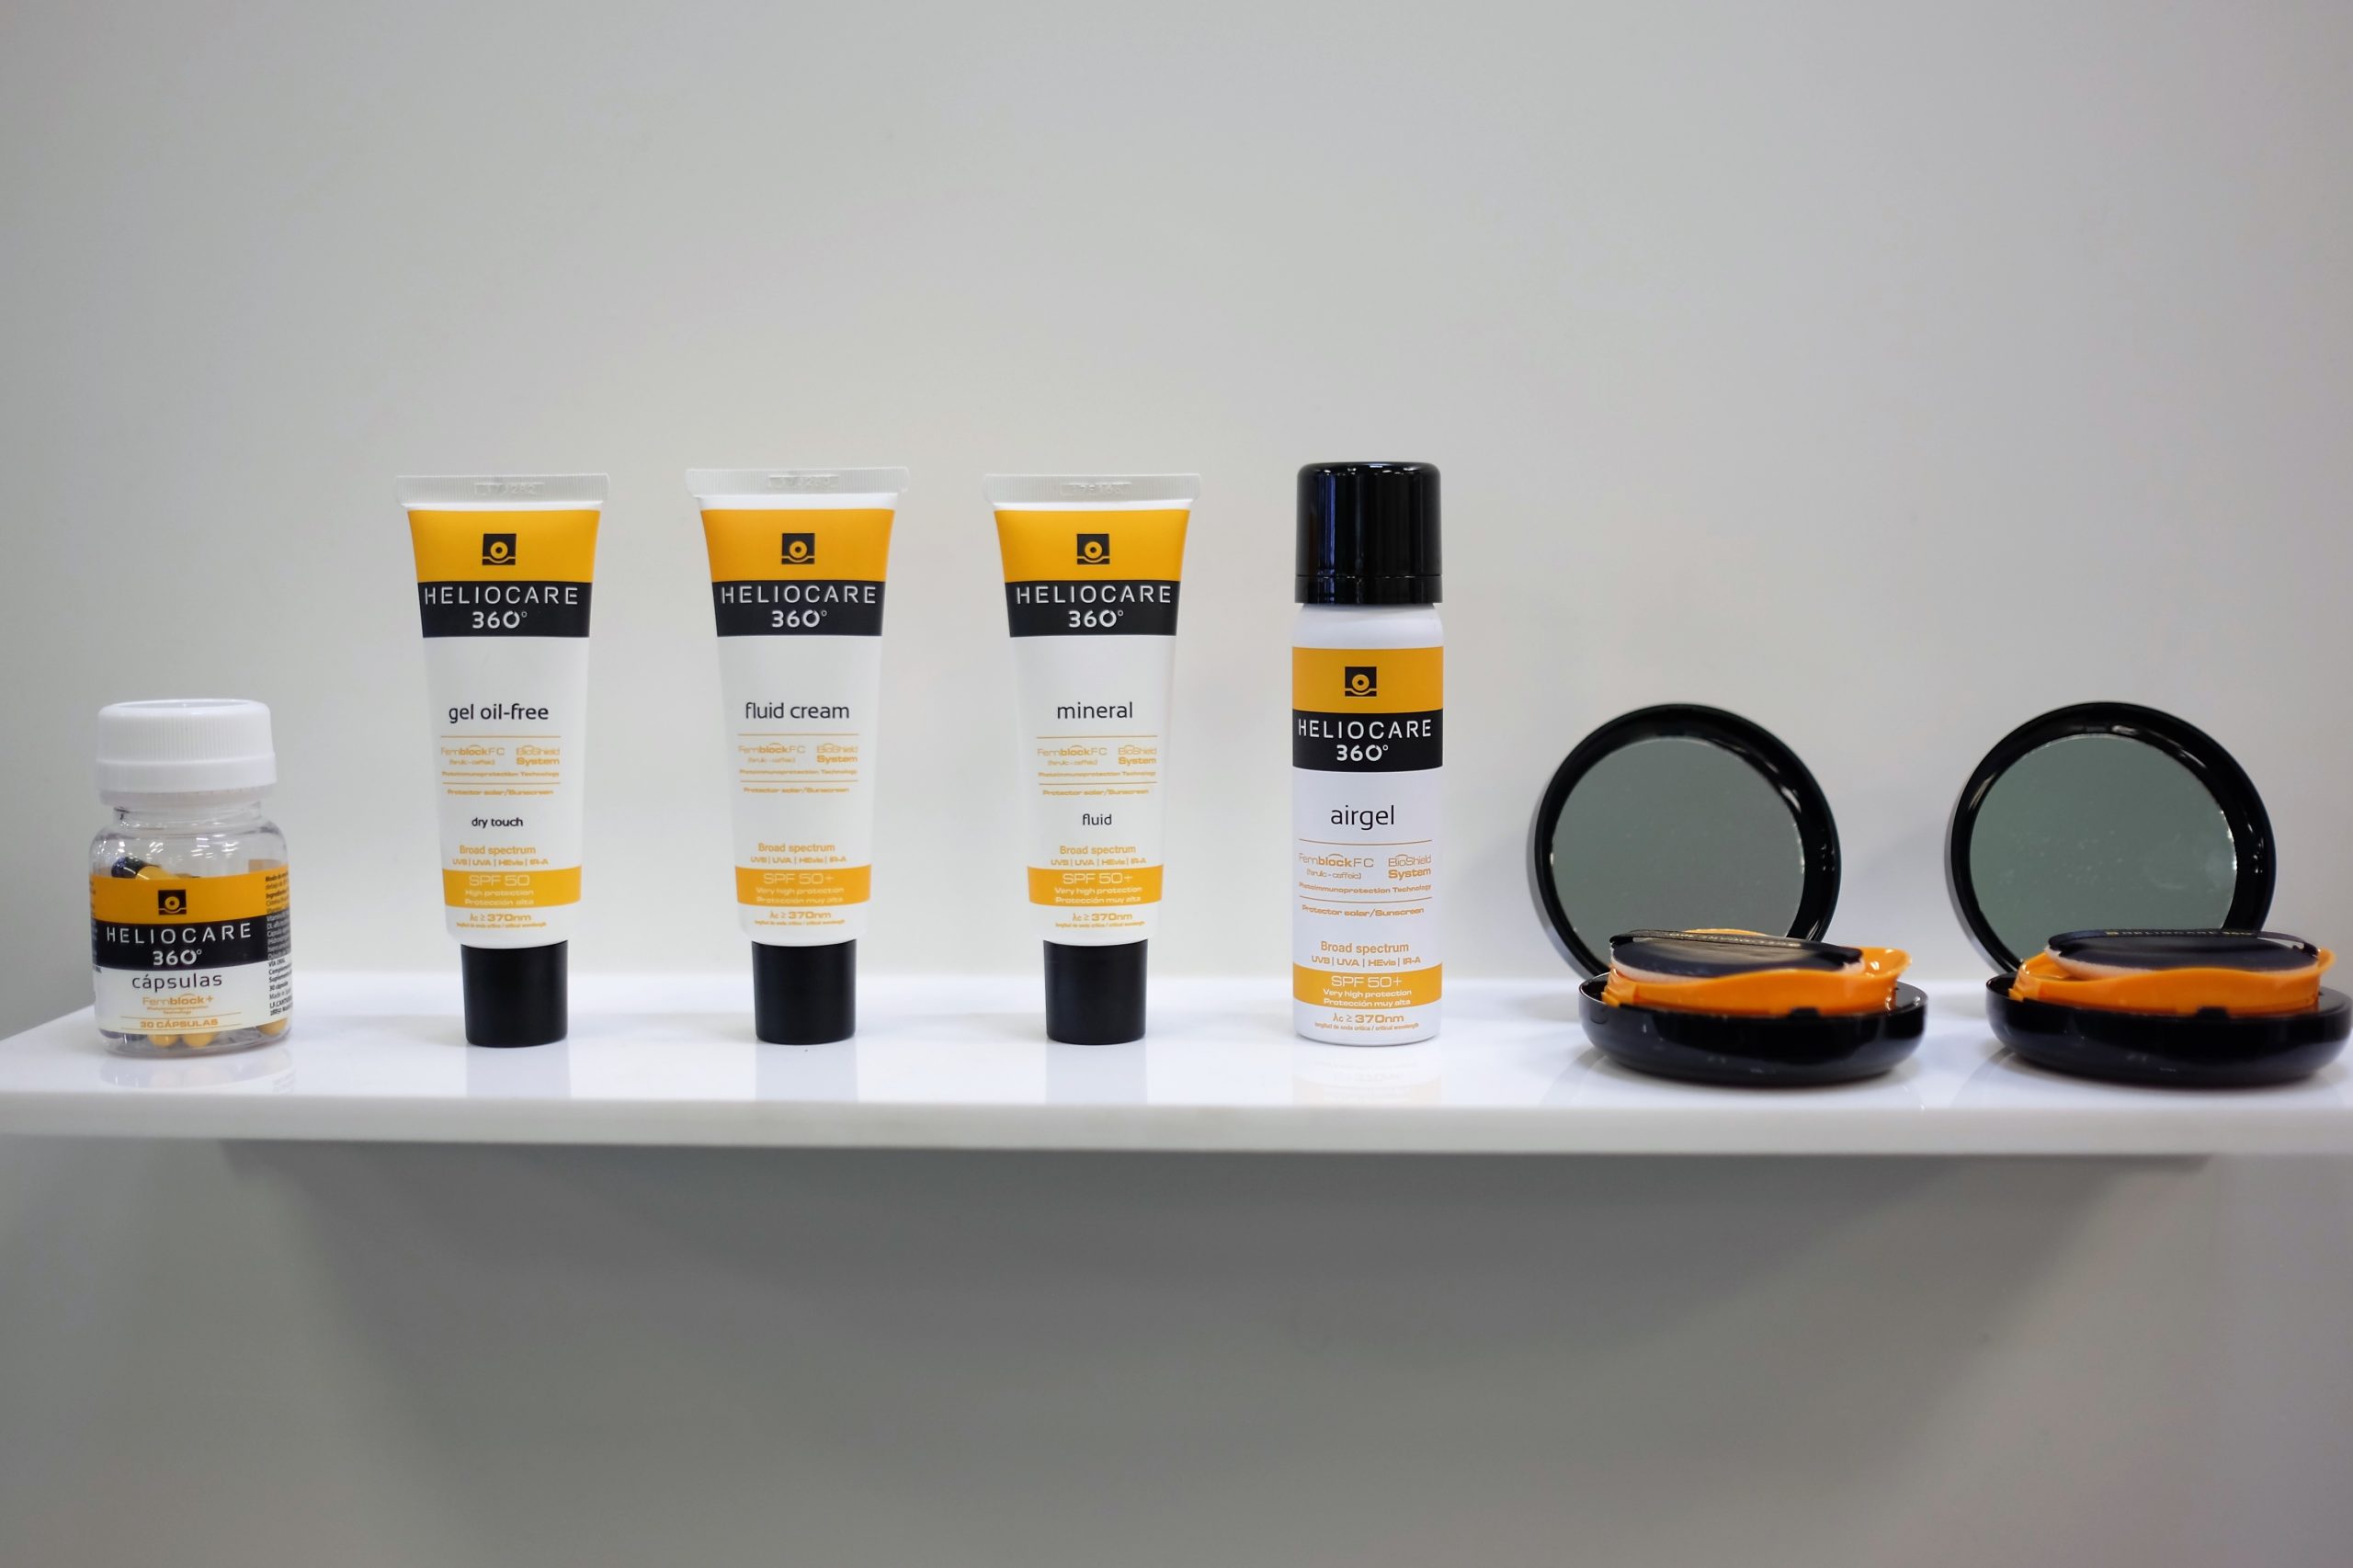 Heliocare 360 Skin Care Product Showcase